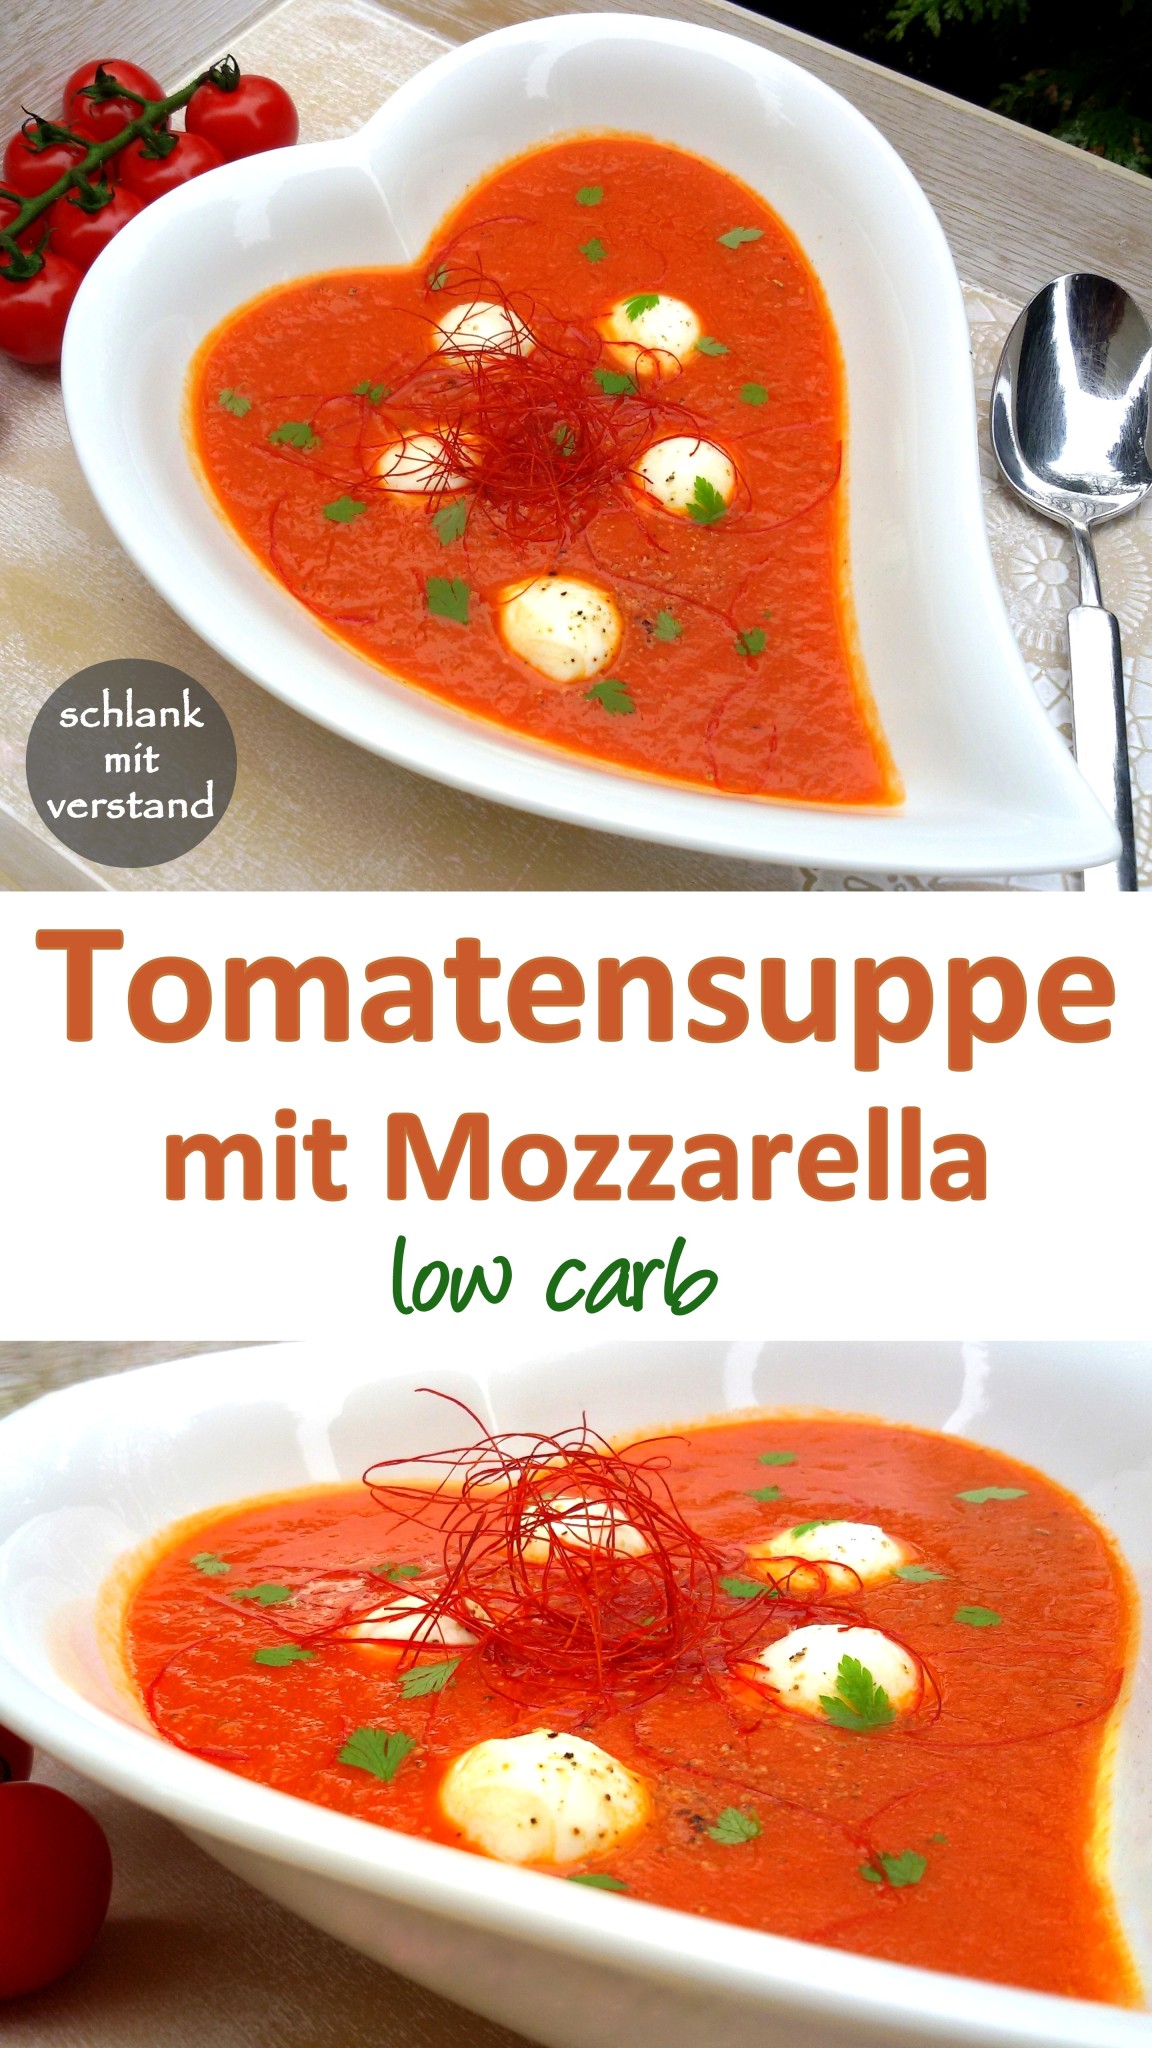 Tomatensuppe mit Mozzarella low carb